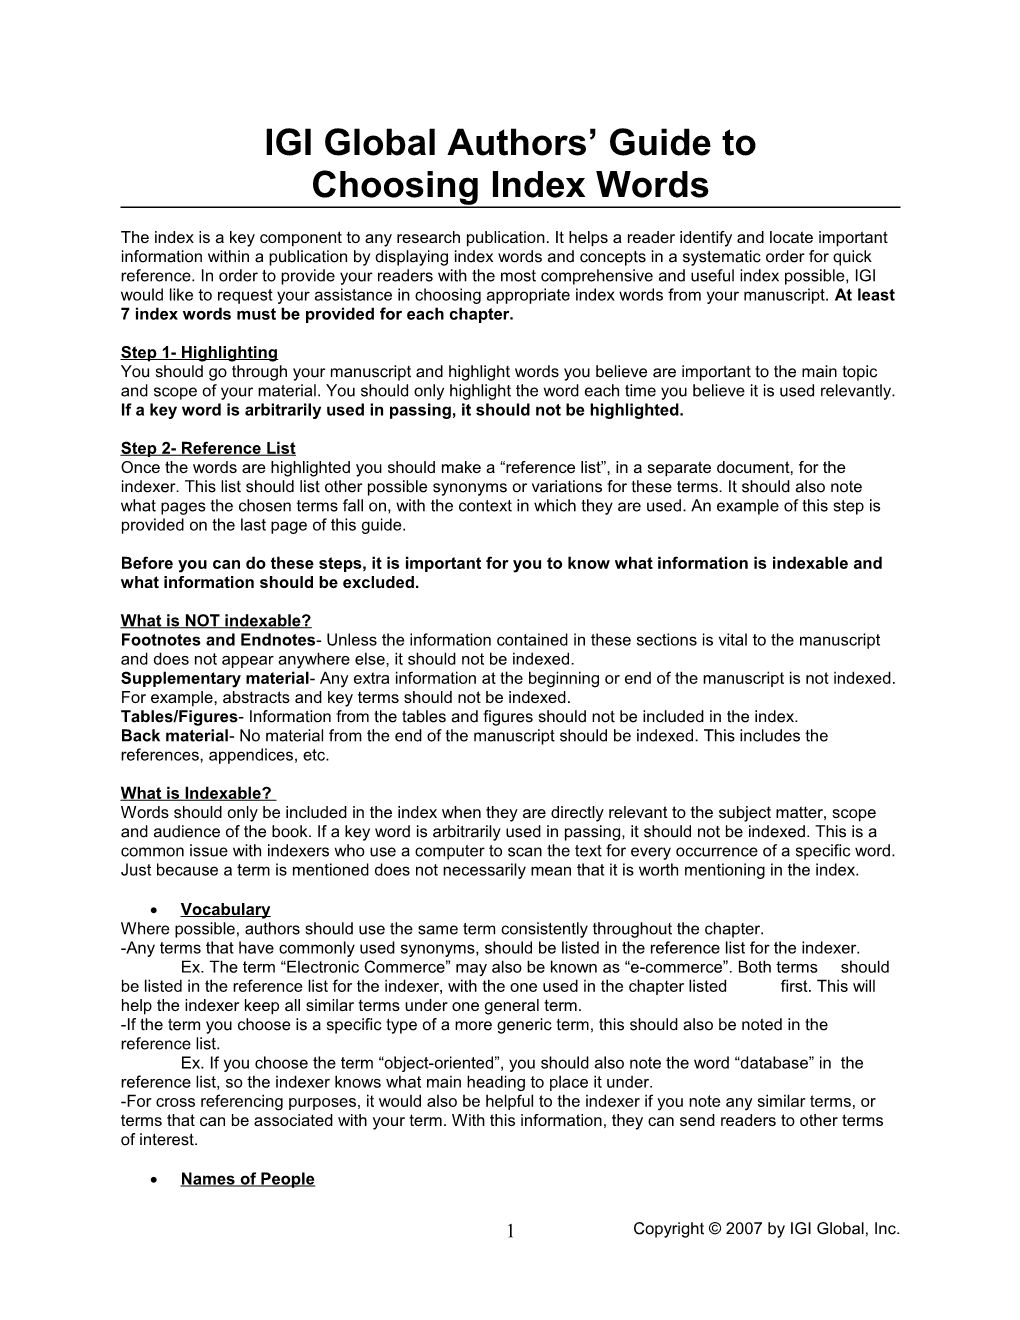 IGI Global Authors Guide To